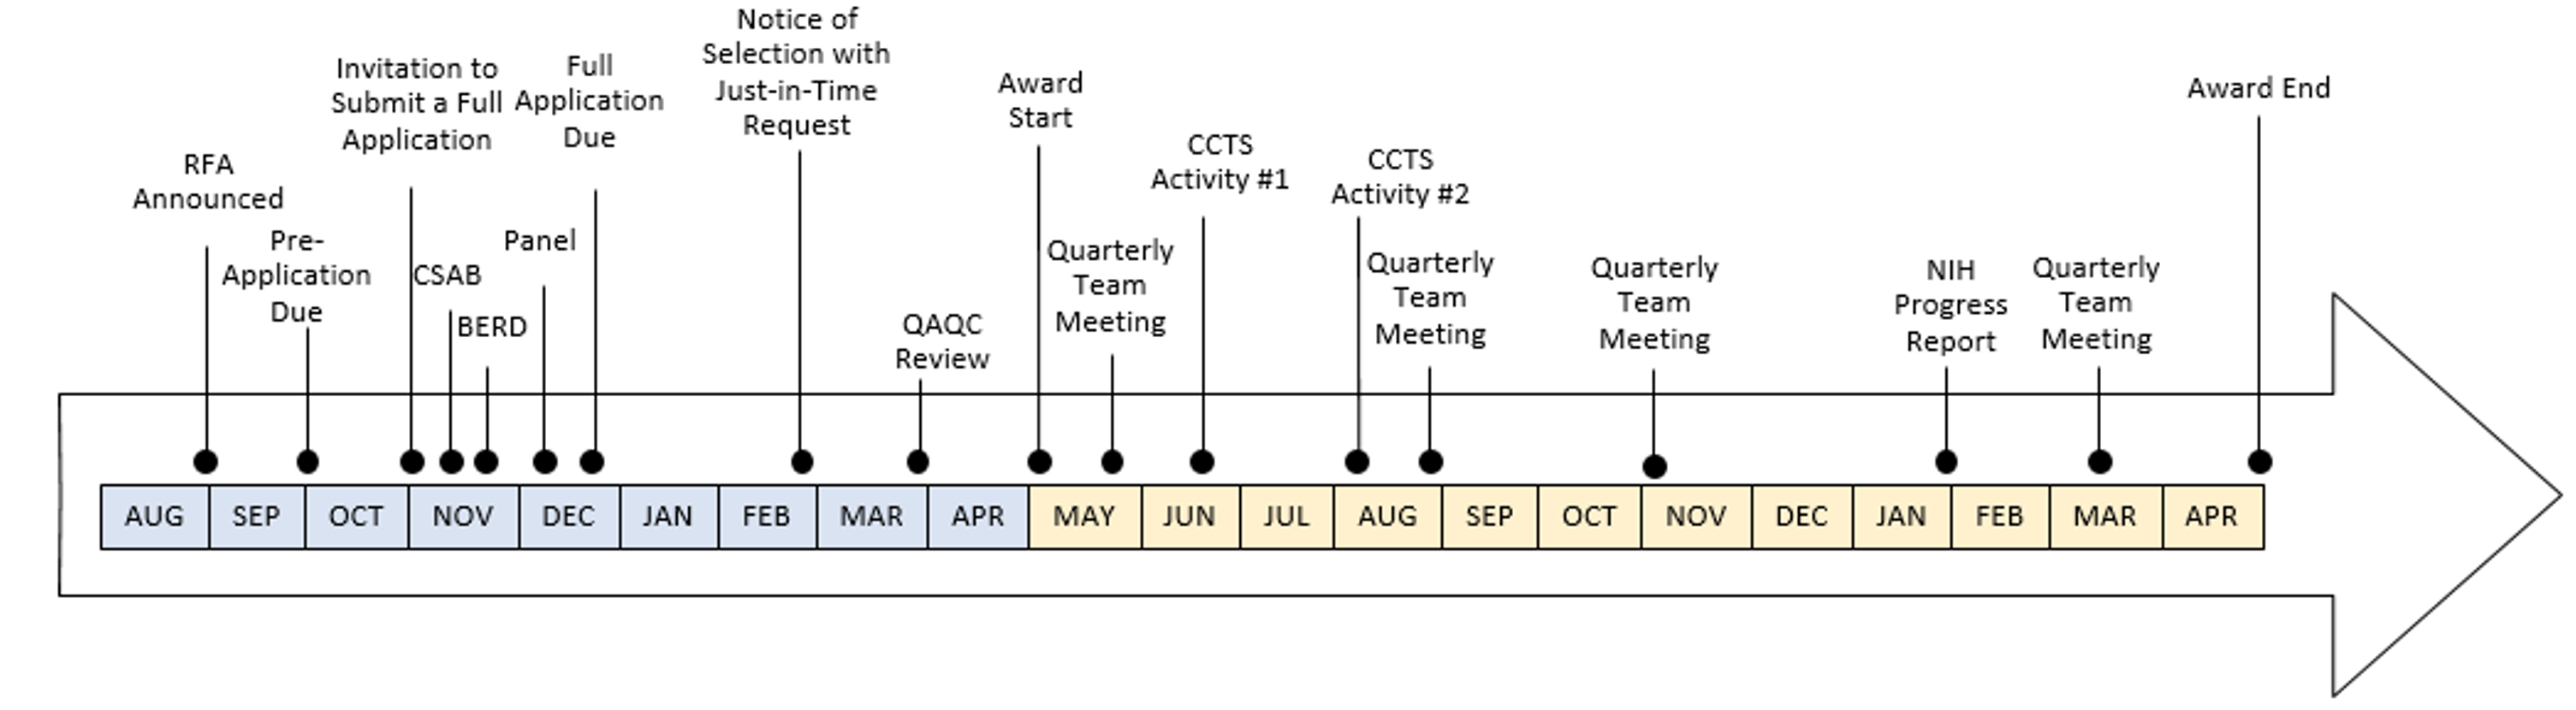 Pilot Process Timeline